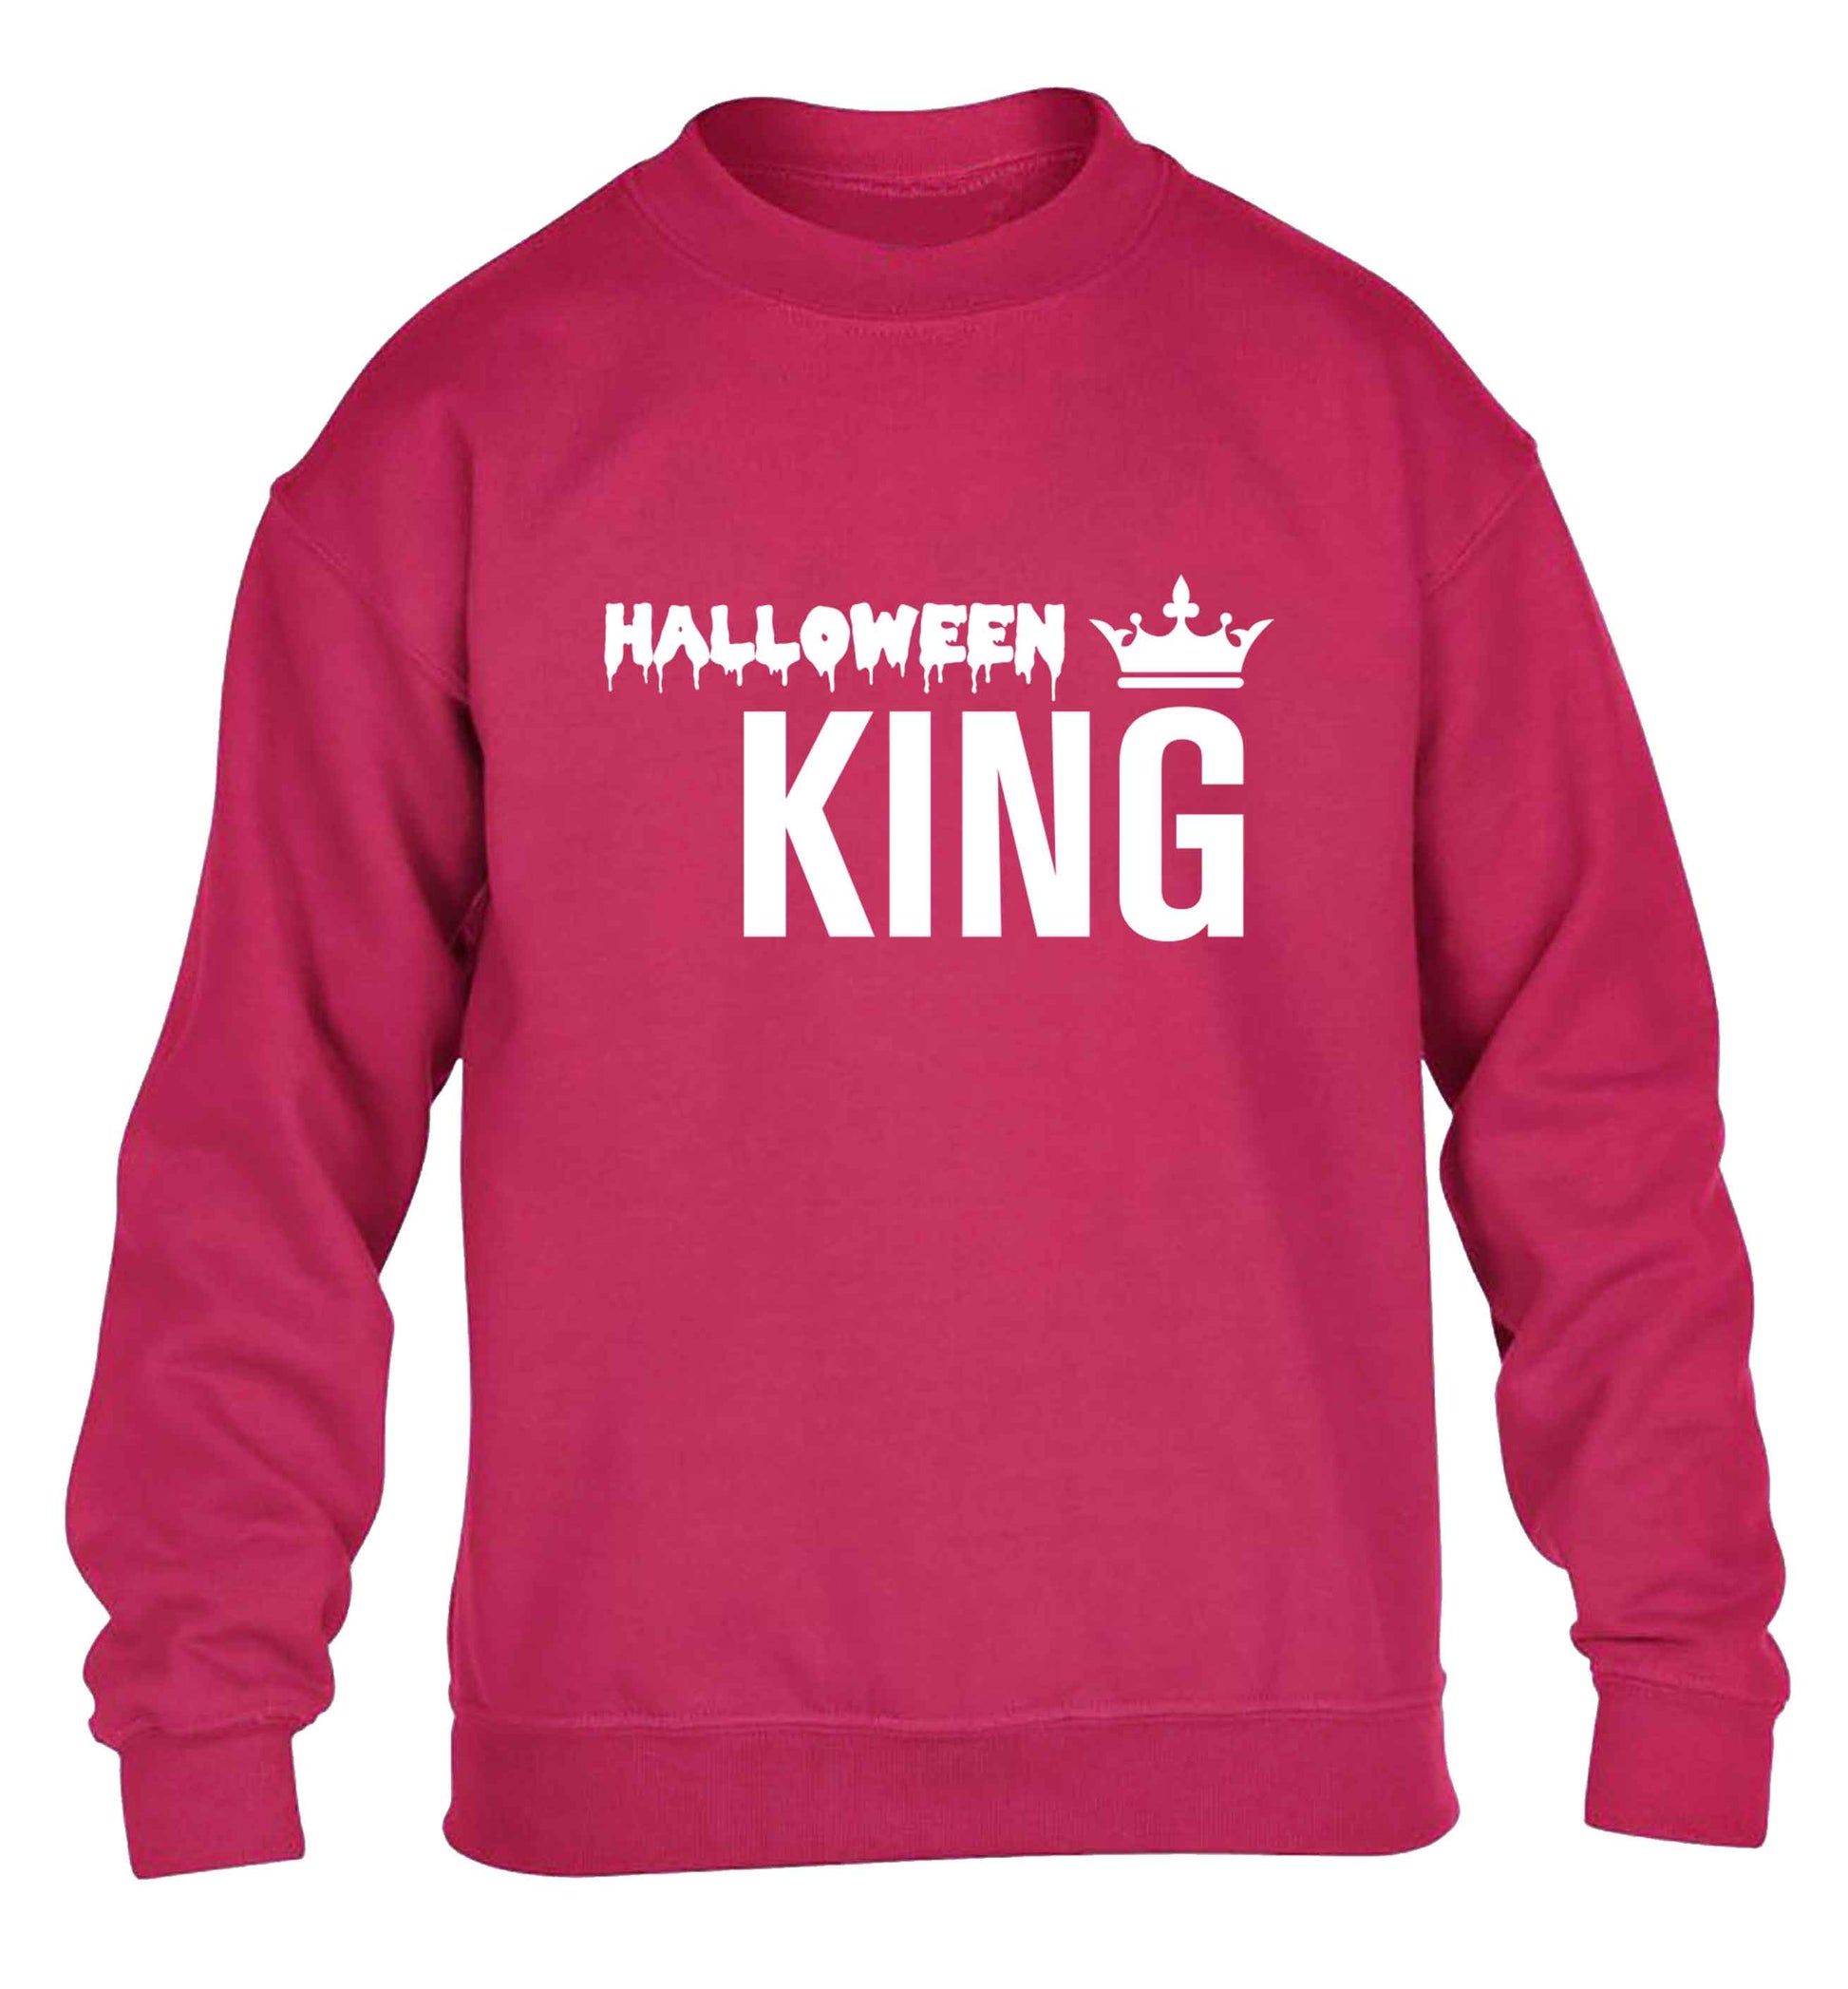 Halloween king children's pink sweater 12-13 Years